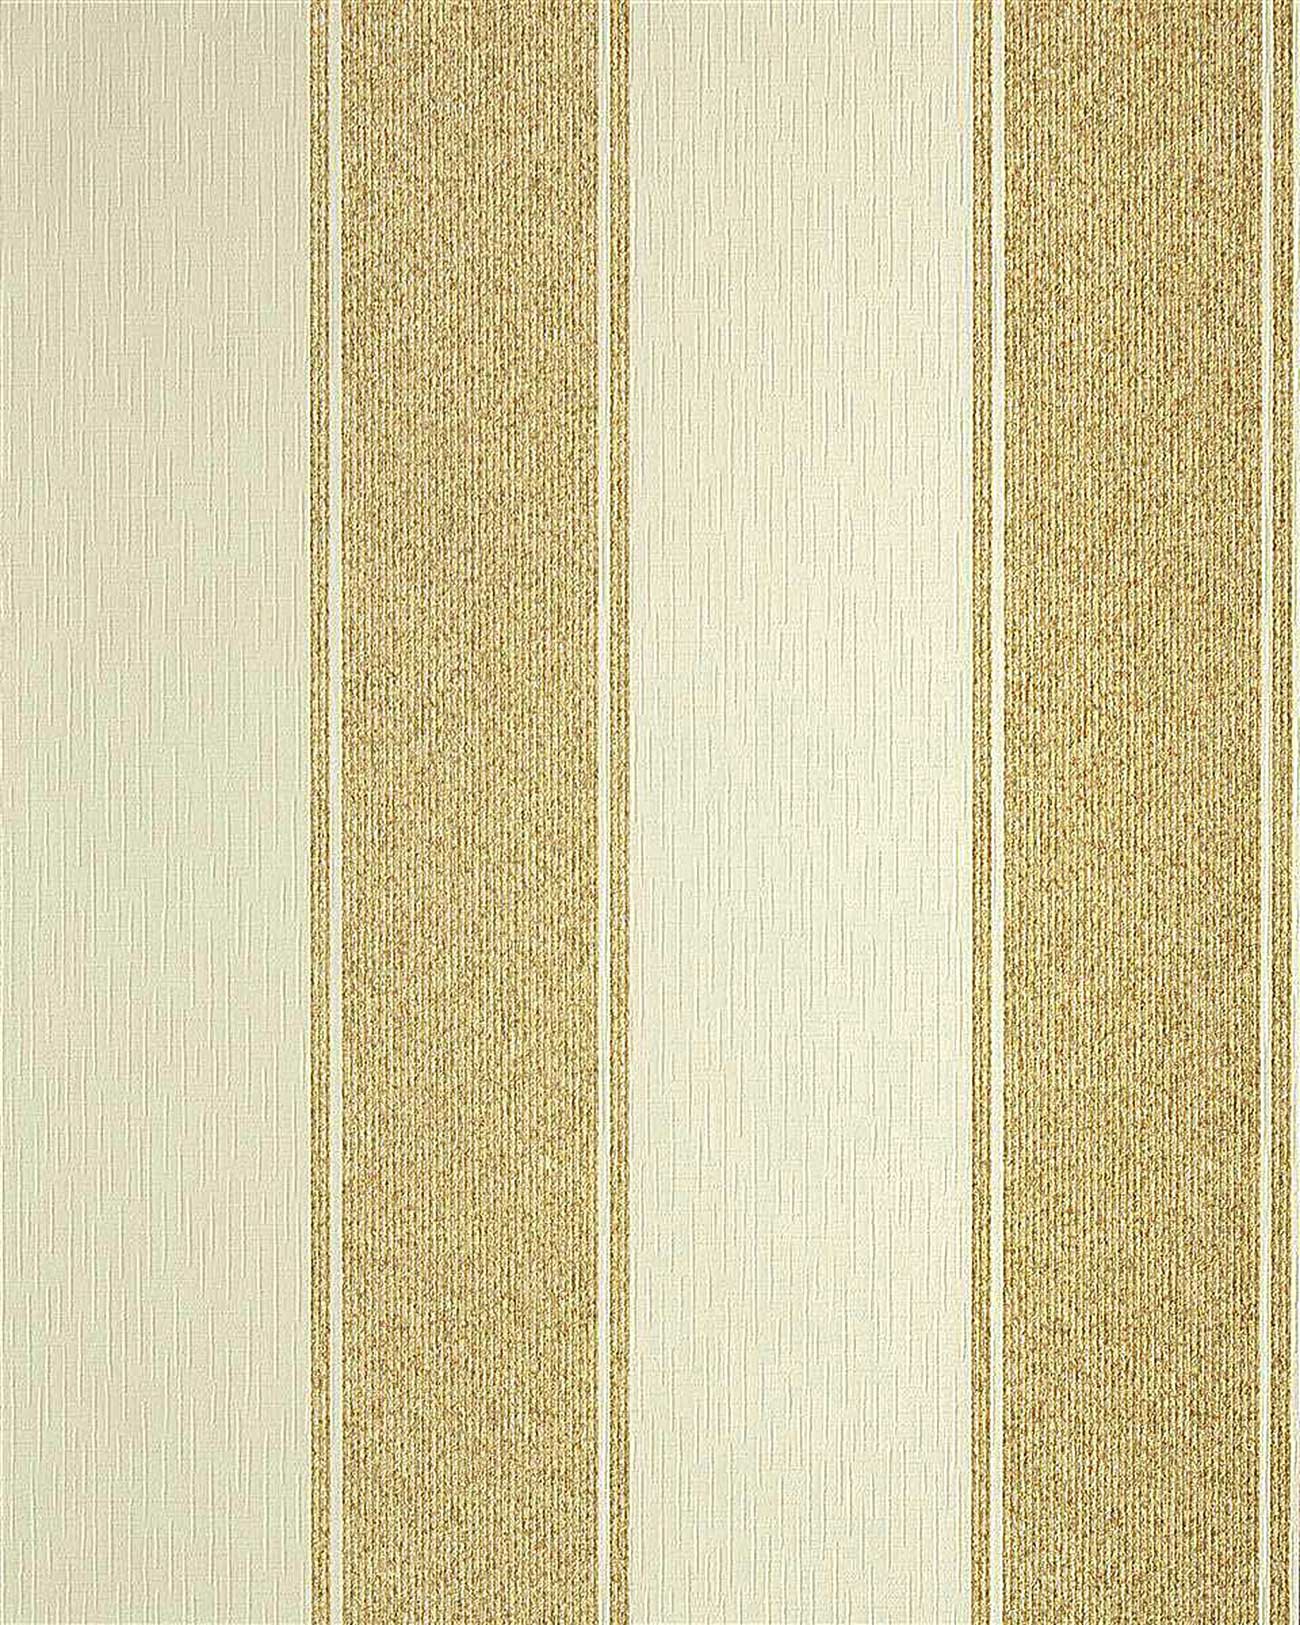 Vinyl Wallpaper Wall Baroque Edem Luxury Stripe Gold White